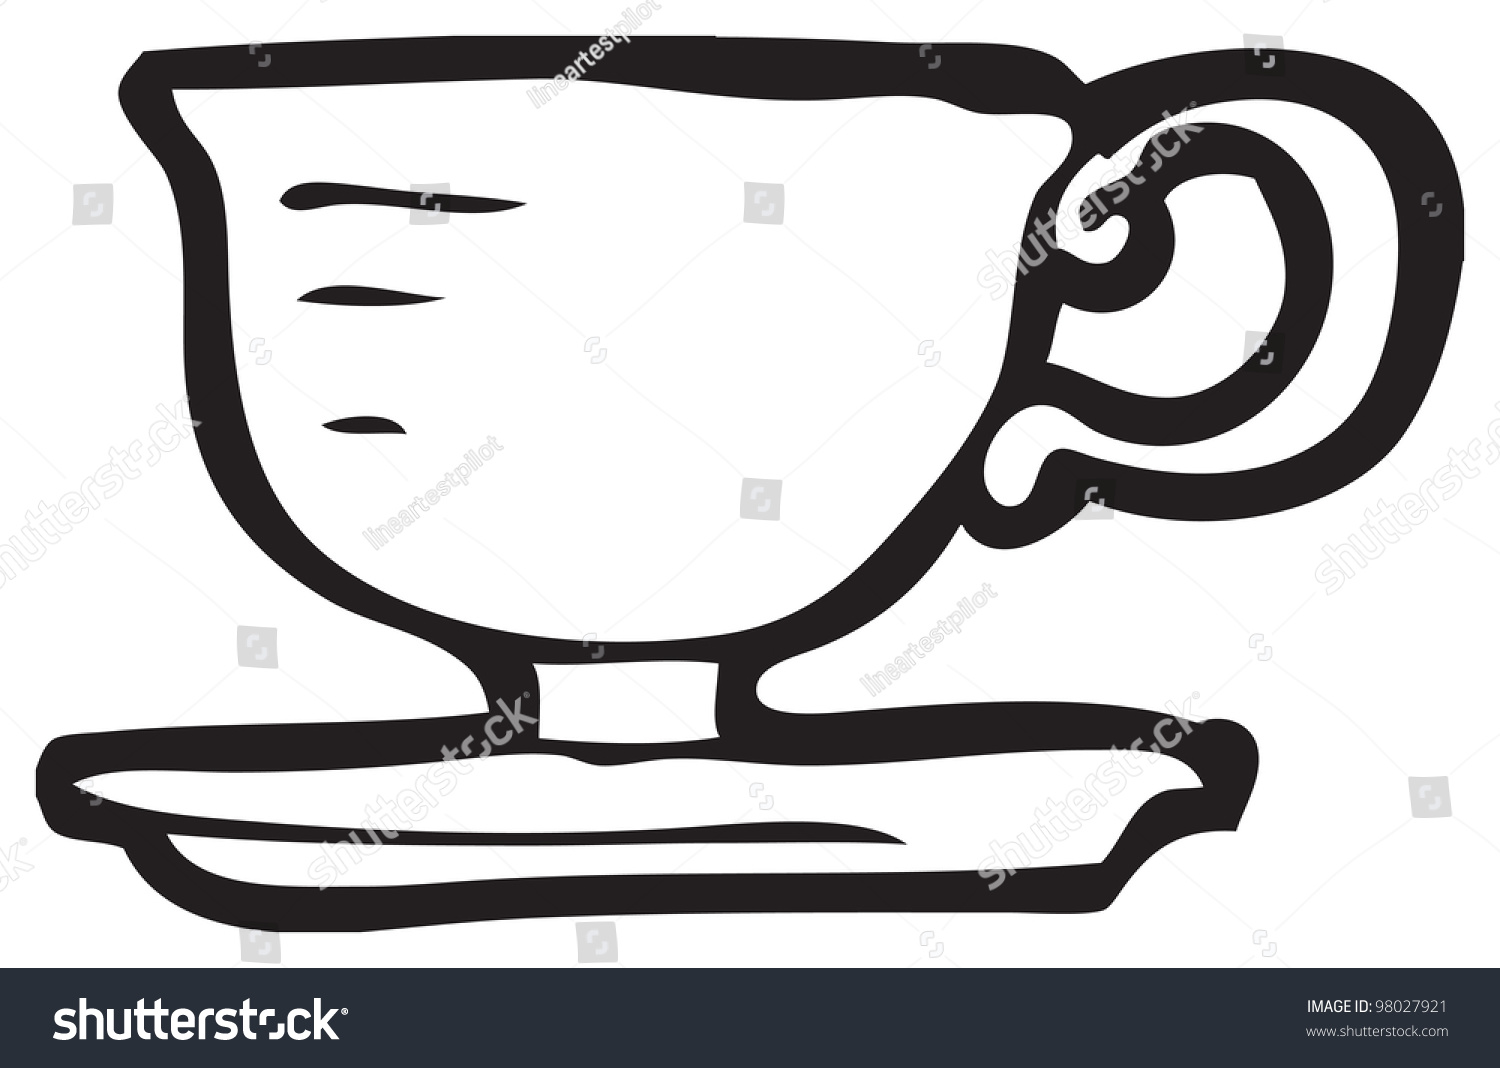 Cartoon Tea Cup Stock Photo 98027921 : Shutterstock